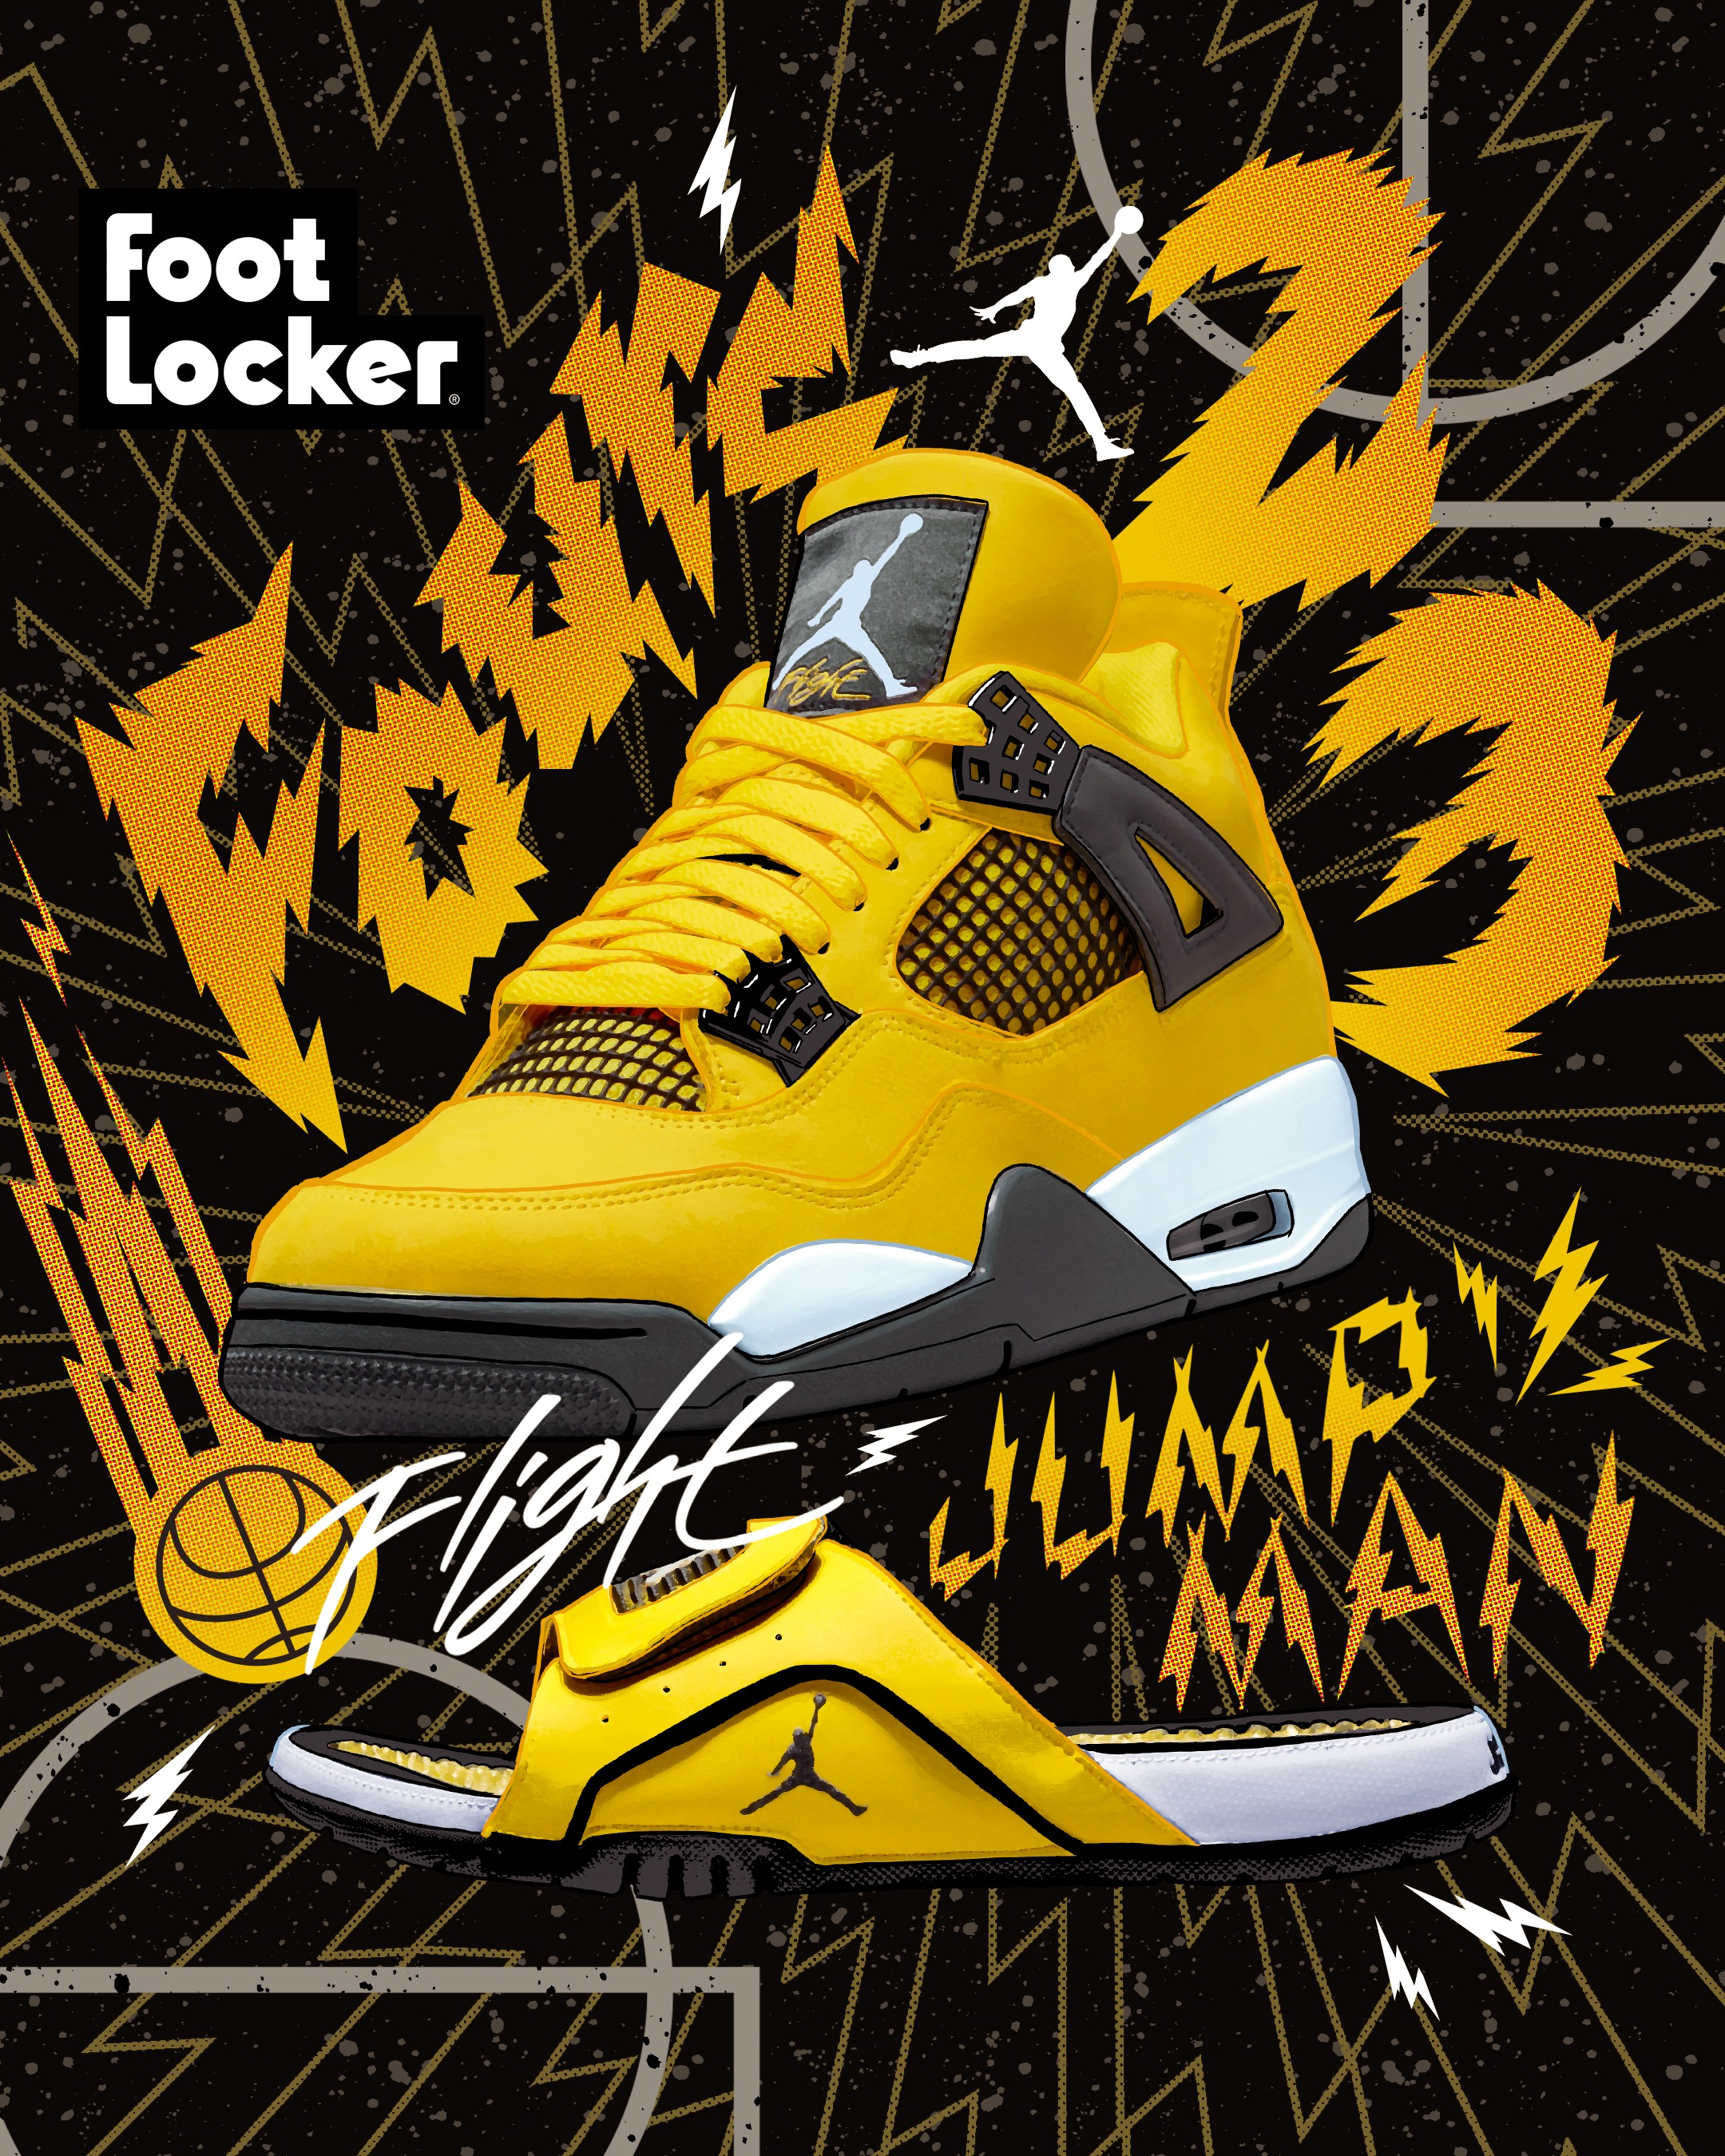 Foot Locker - ⚡ ⚡ The Highly Anticipated #Jordan Retro IV 'Lightning' Drops Saturday 8 28 In Full Family Sizing!